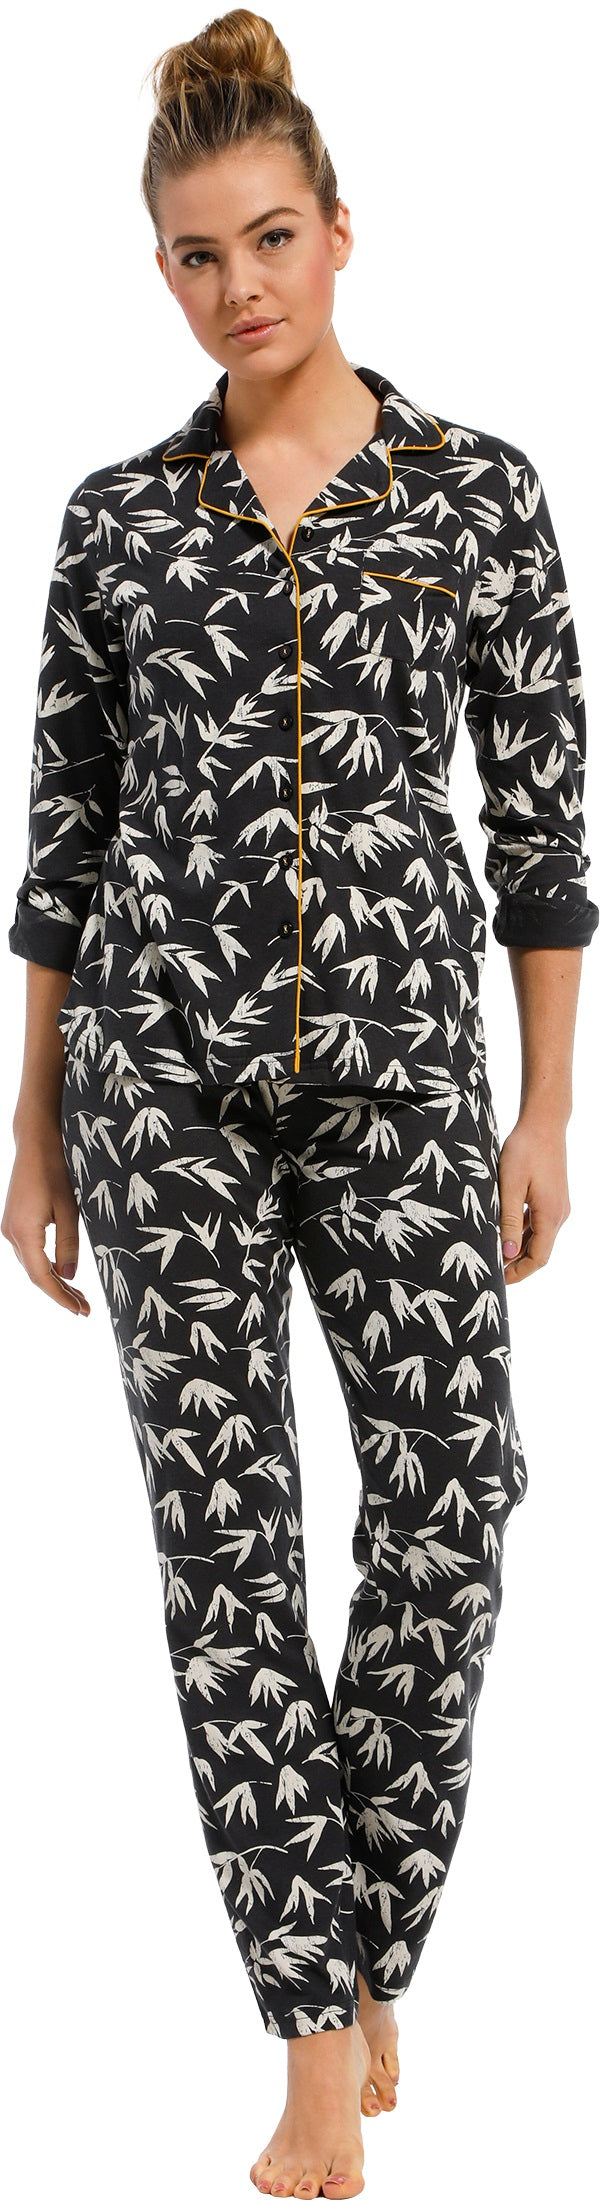 Pastunette Ladies Dark Grey Bamboo Leaf Print Pyjama Set 100% Cotton